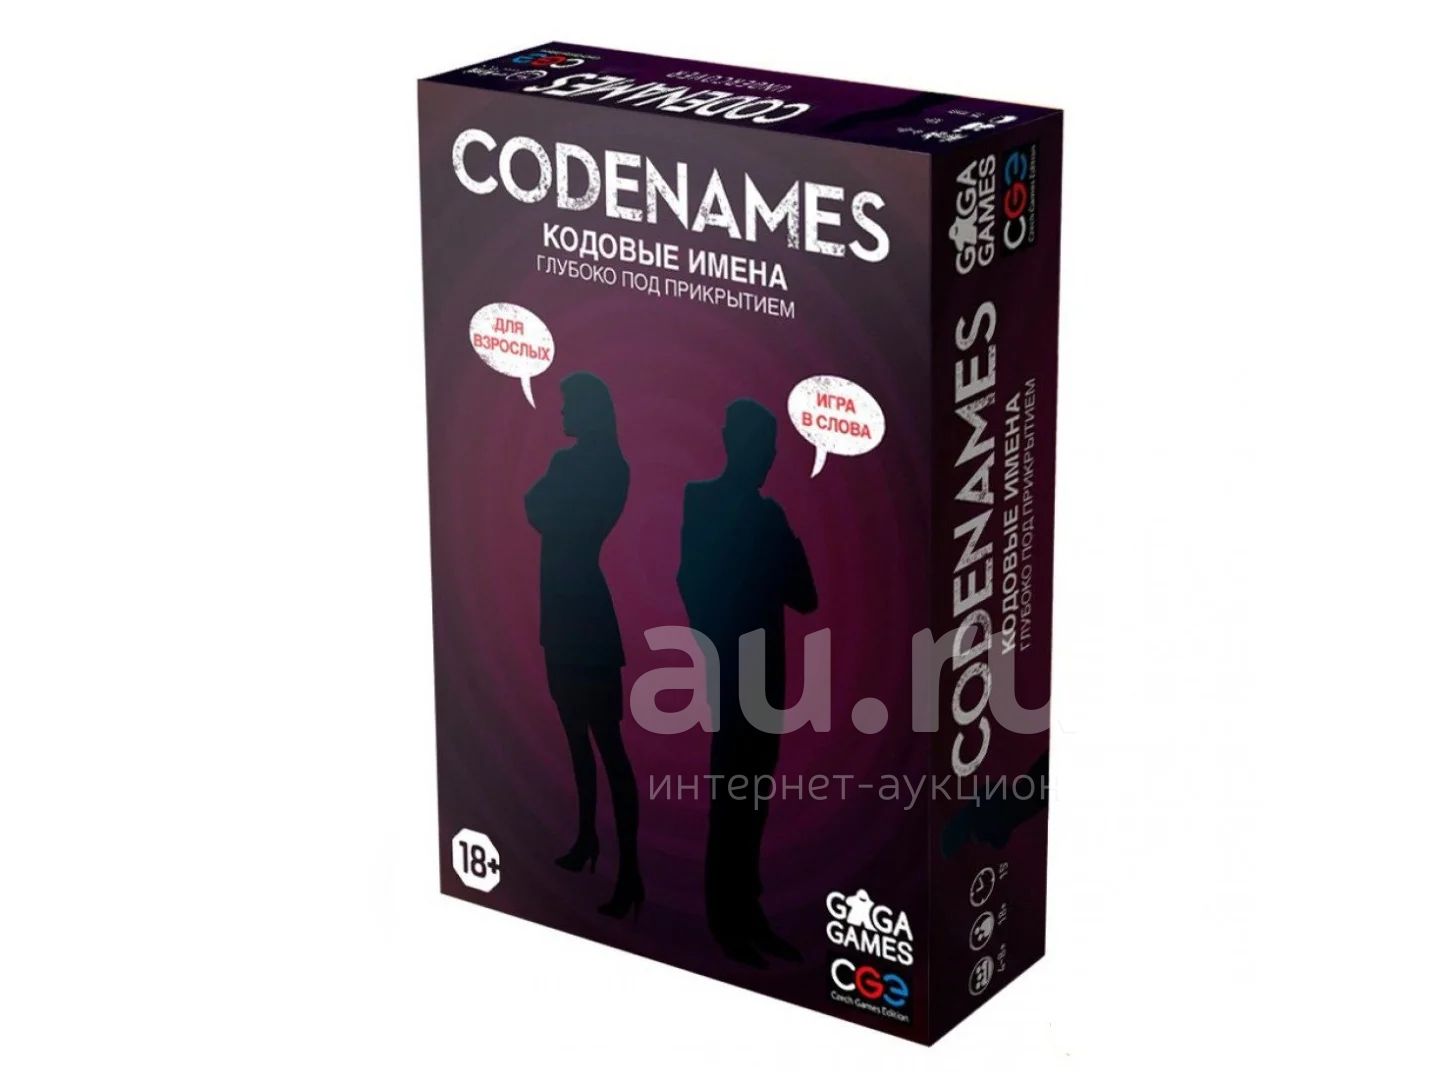 Code name please. Настольная игра коднеймс. Настольная игра кодовые имена (Codenames).